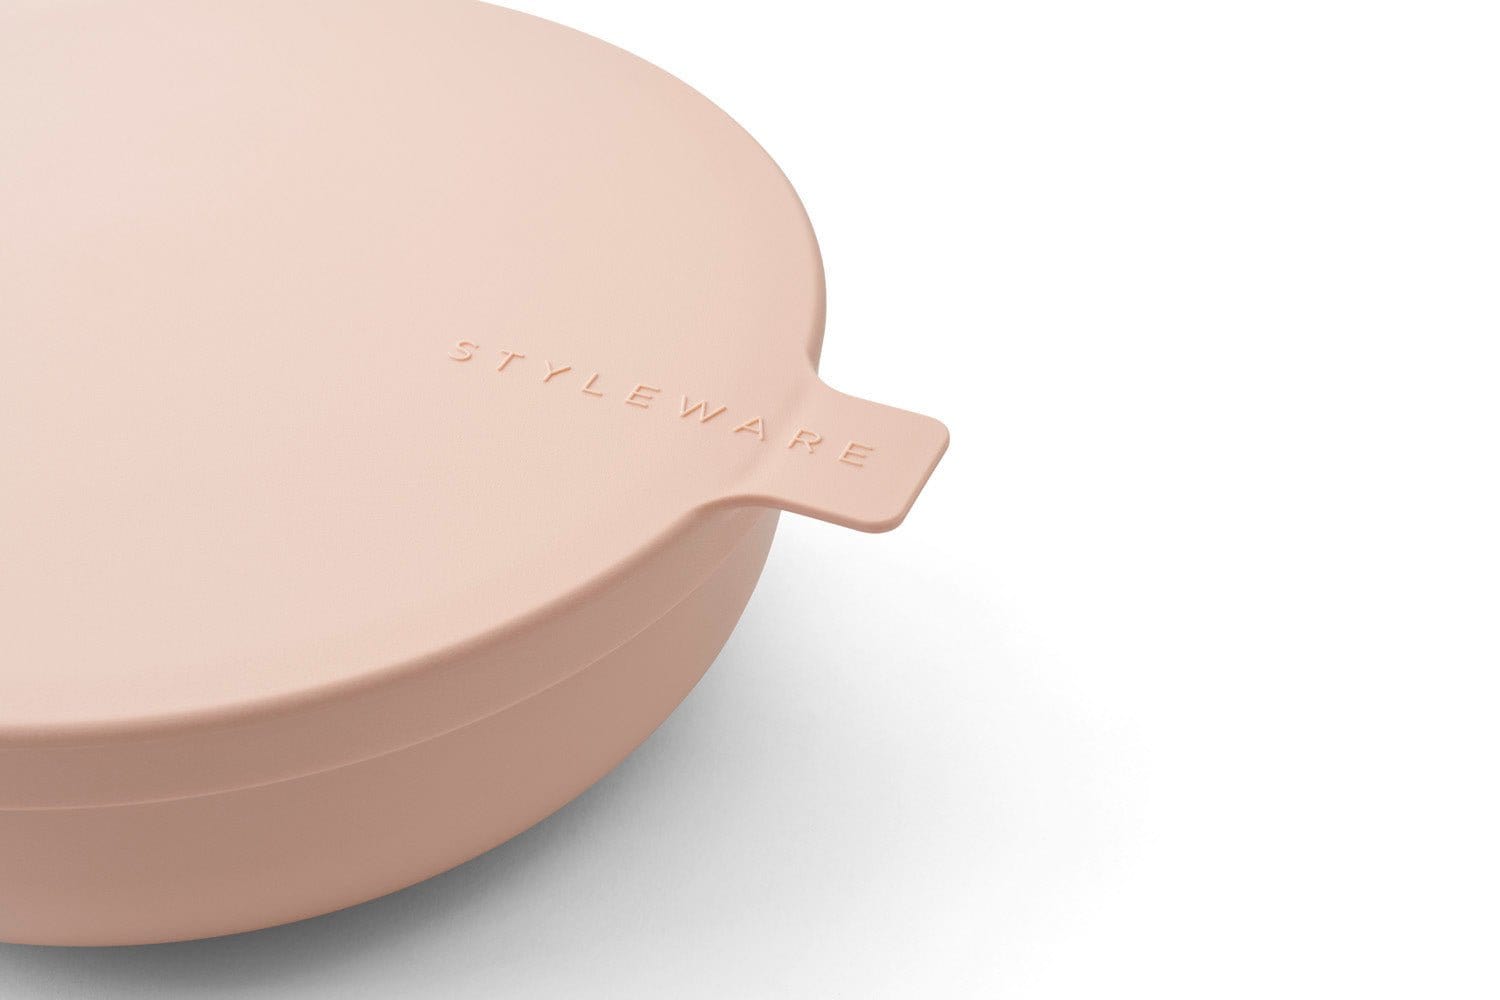 Styleware Servingware Styleware Nesting Bowl - Blush (7527646462201)